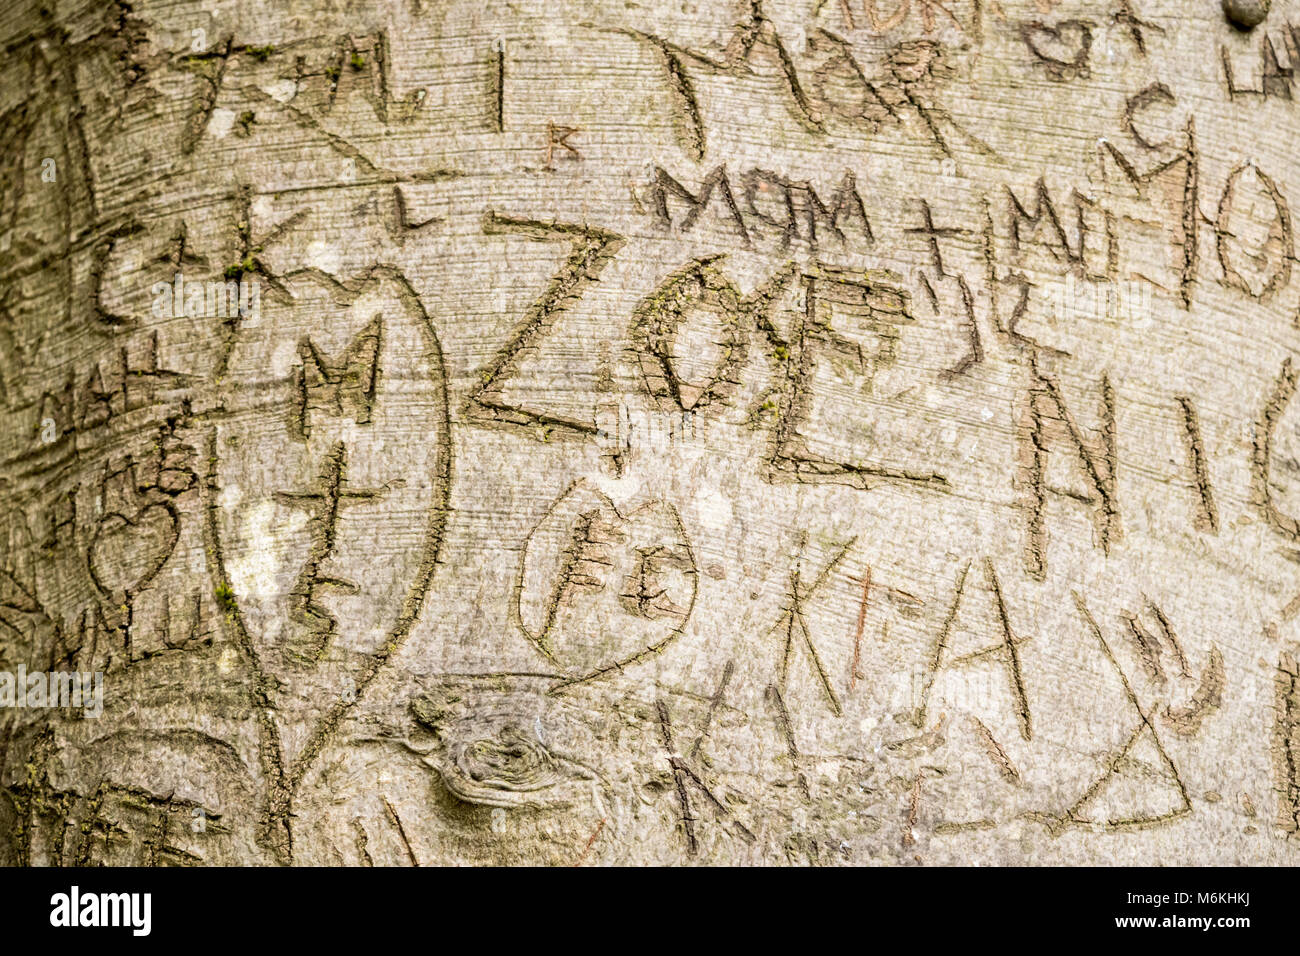 Issaquah, Washington, USA.  Numerous initial and name carvings into tree bark. Stock Photo